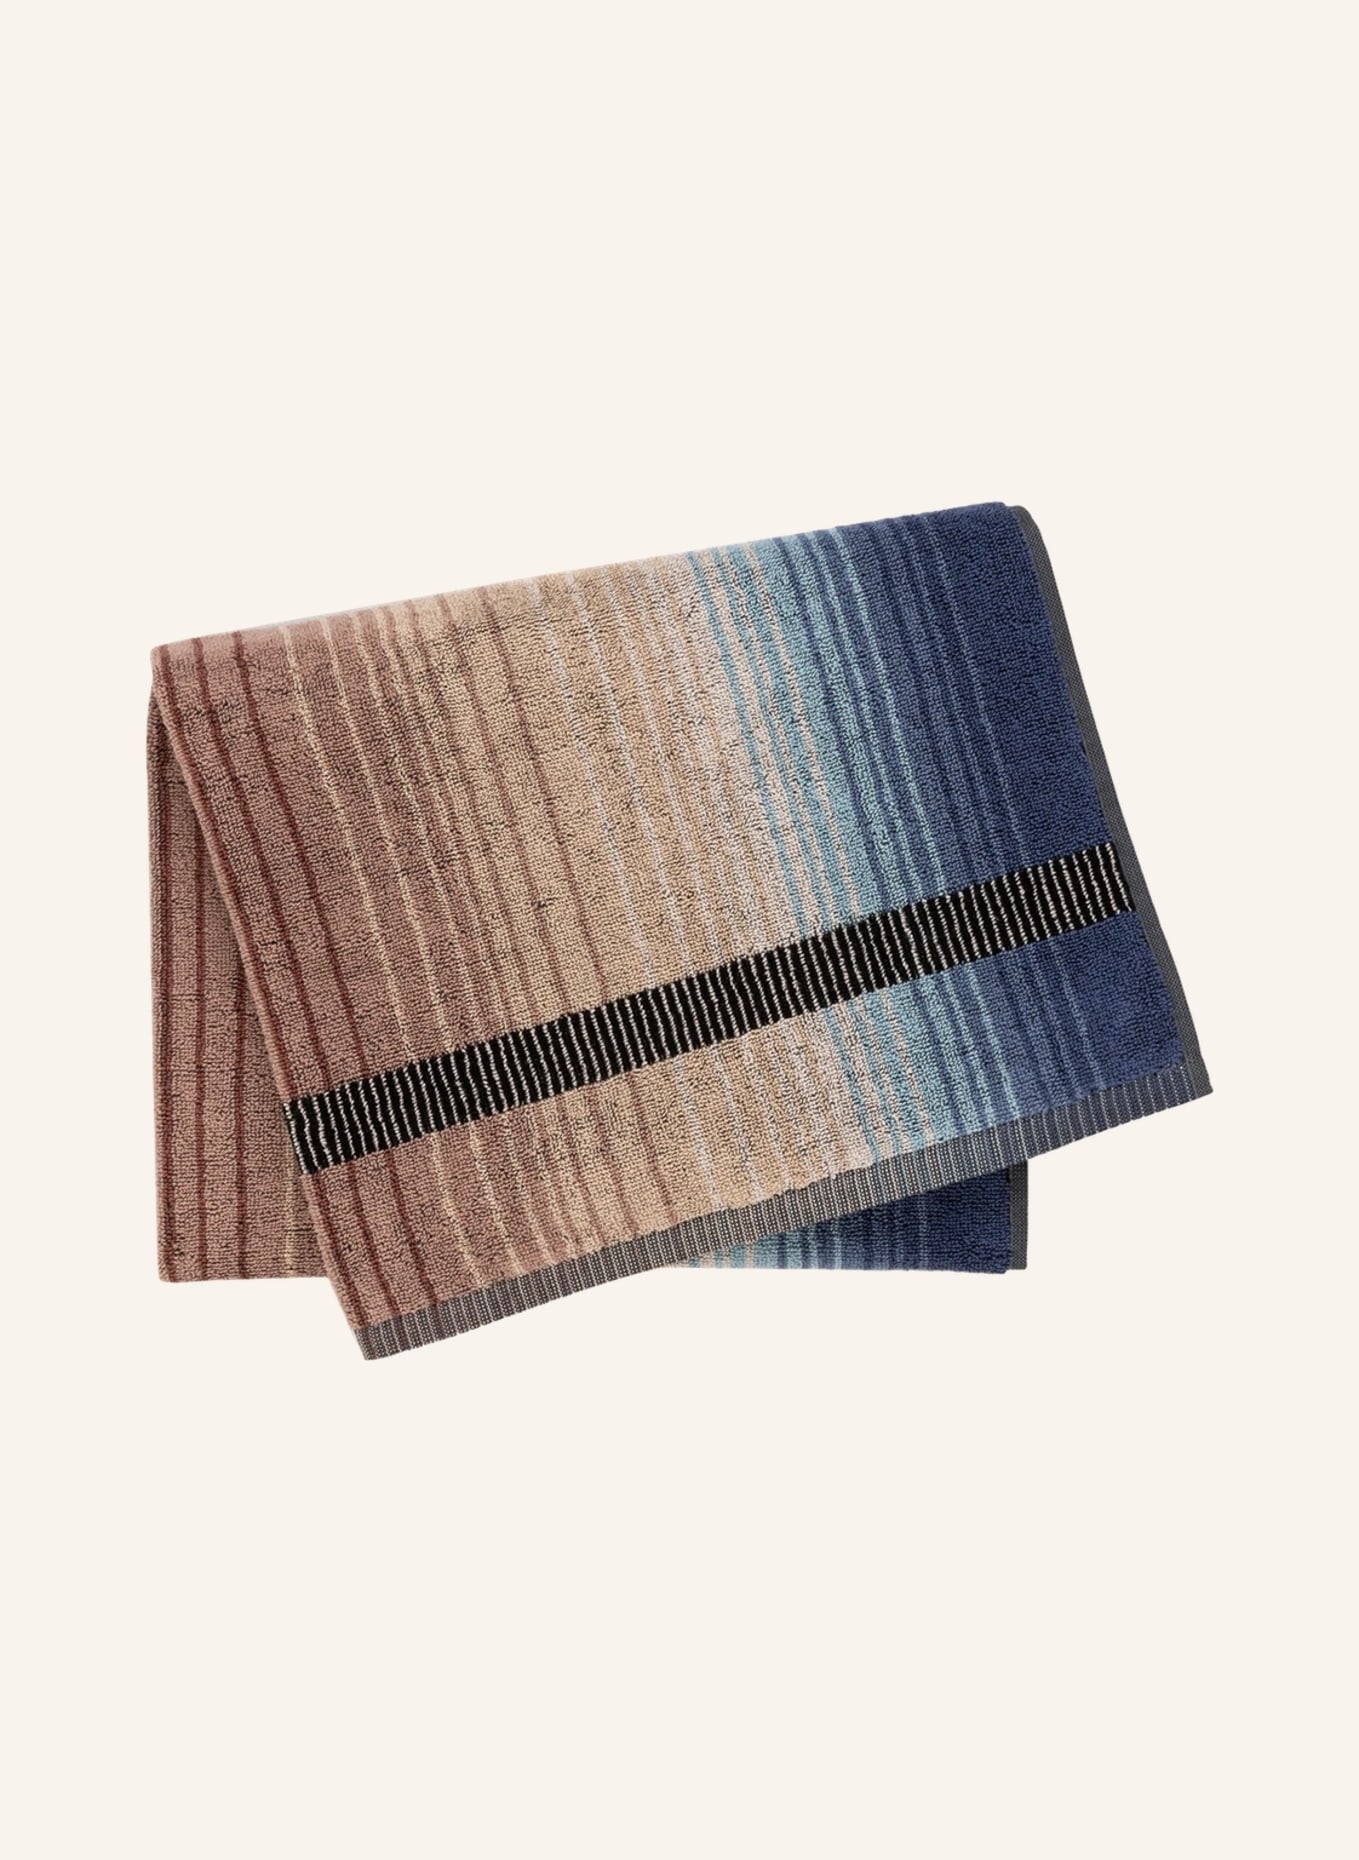 MISSONI Home Handtuch AYRTON , Farbe: BRAUN/ CAMEL/ DUNKELBLAU (Bild 2)